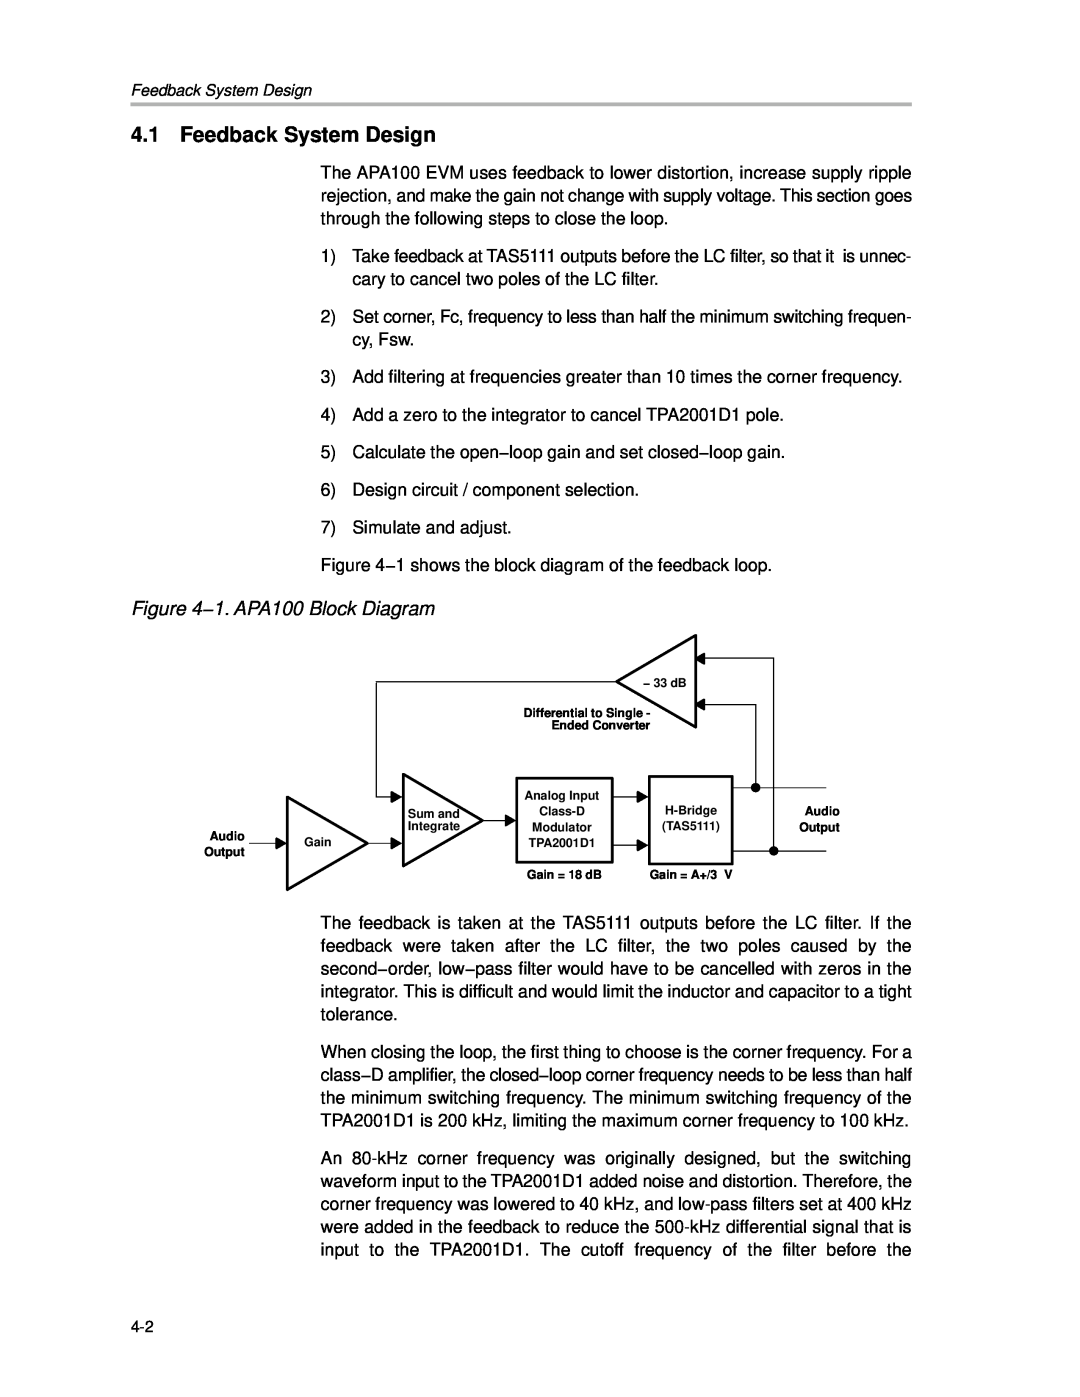 Texas Instruments manual Feedback System Design, 1. APA100 Block Diagram 